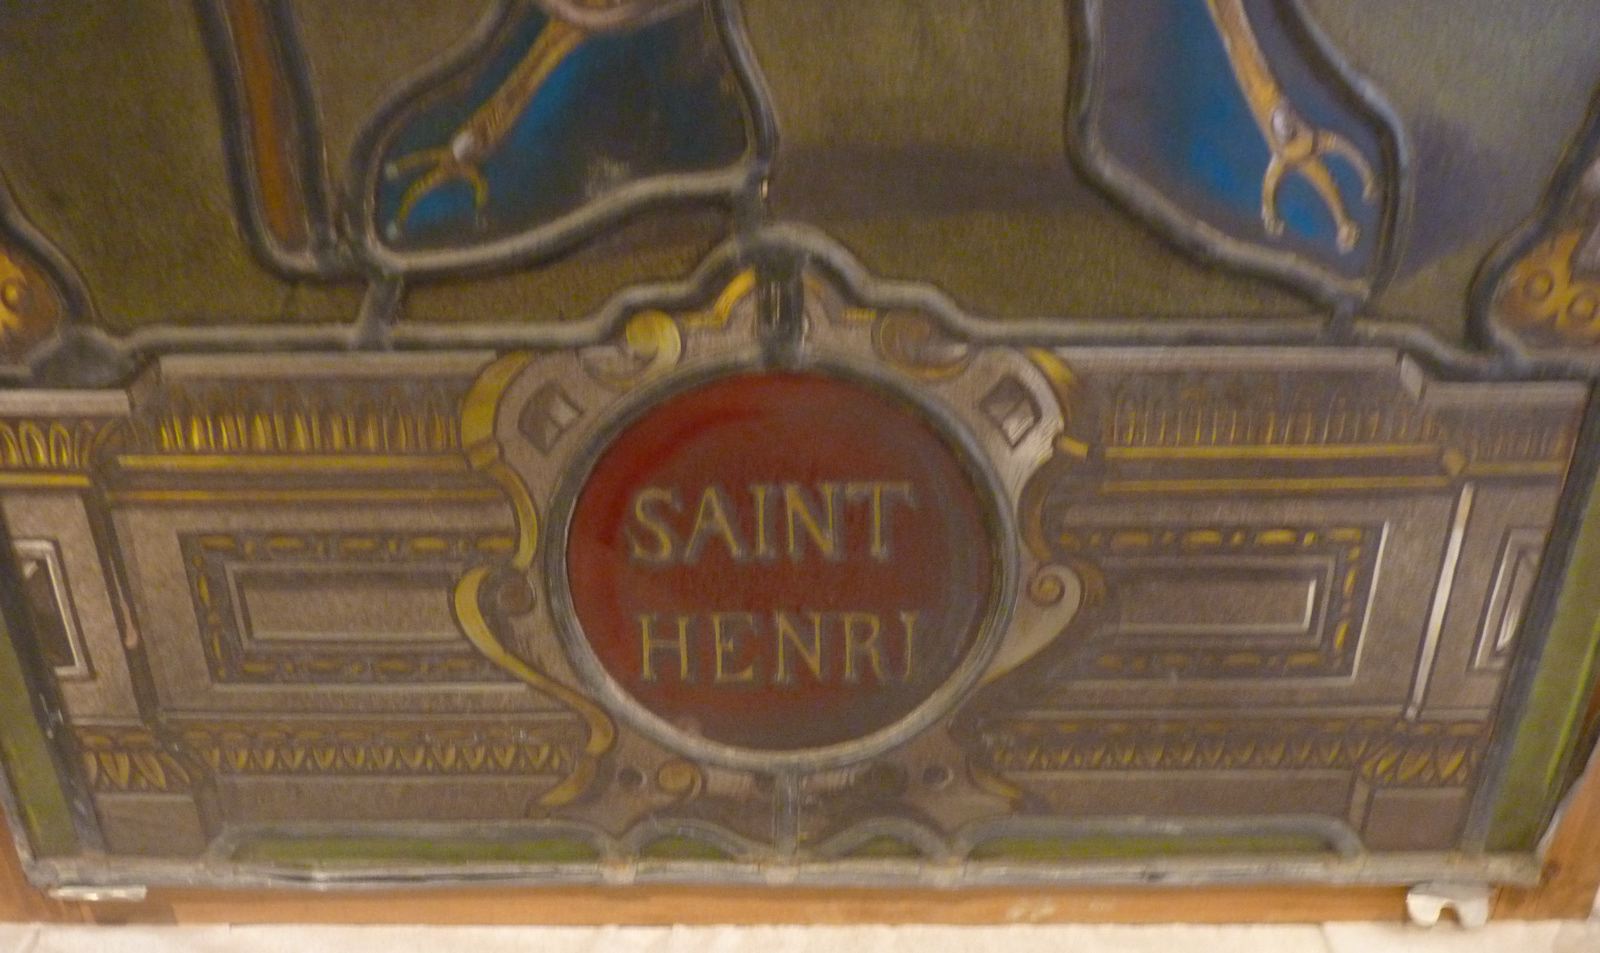 Saint Henri